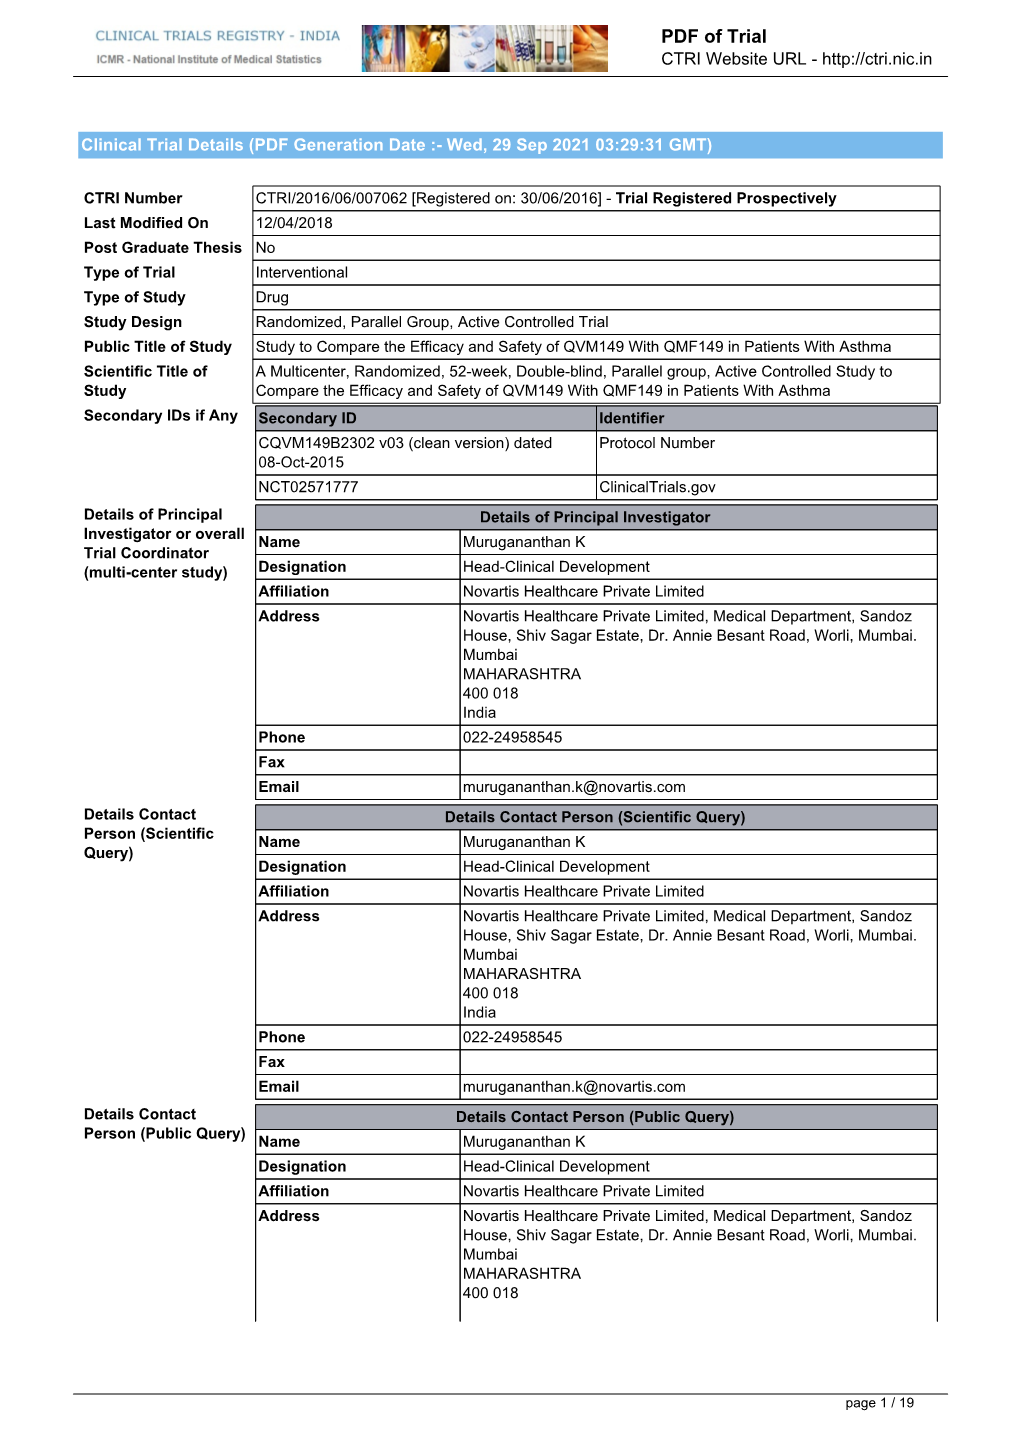 Clinical Trial Details (PDF Generation Date :- Sun, 05 Sep 2021 04